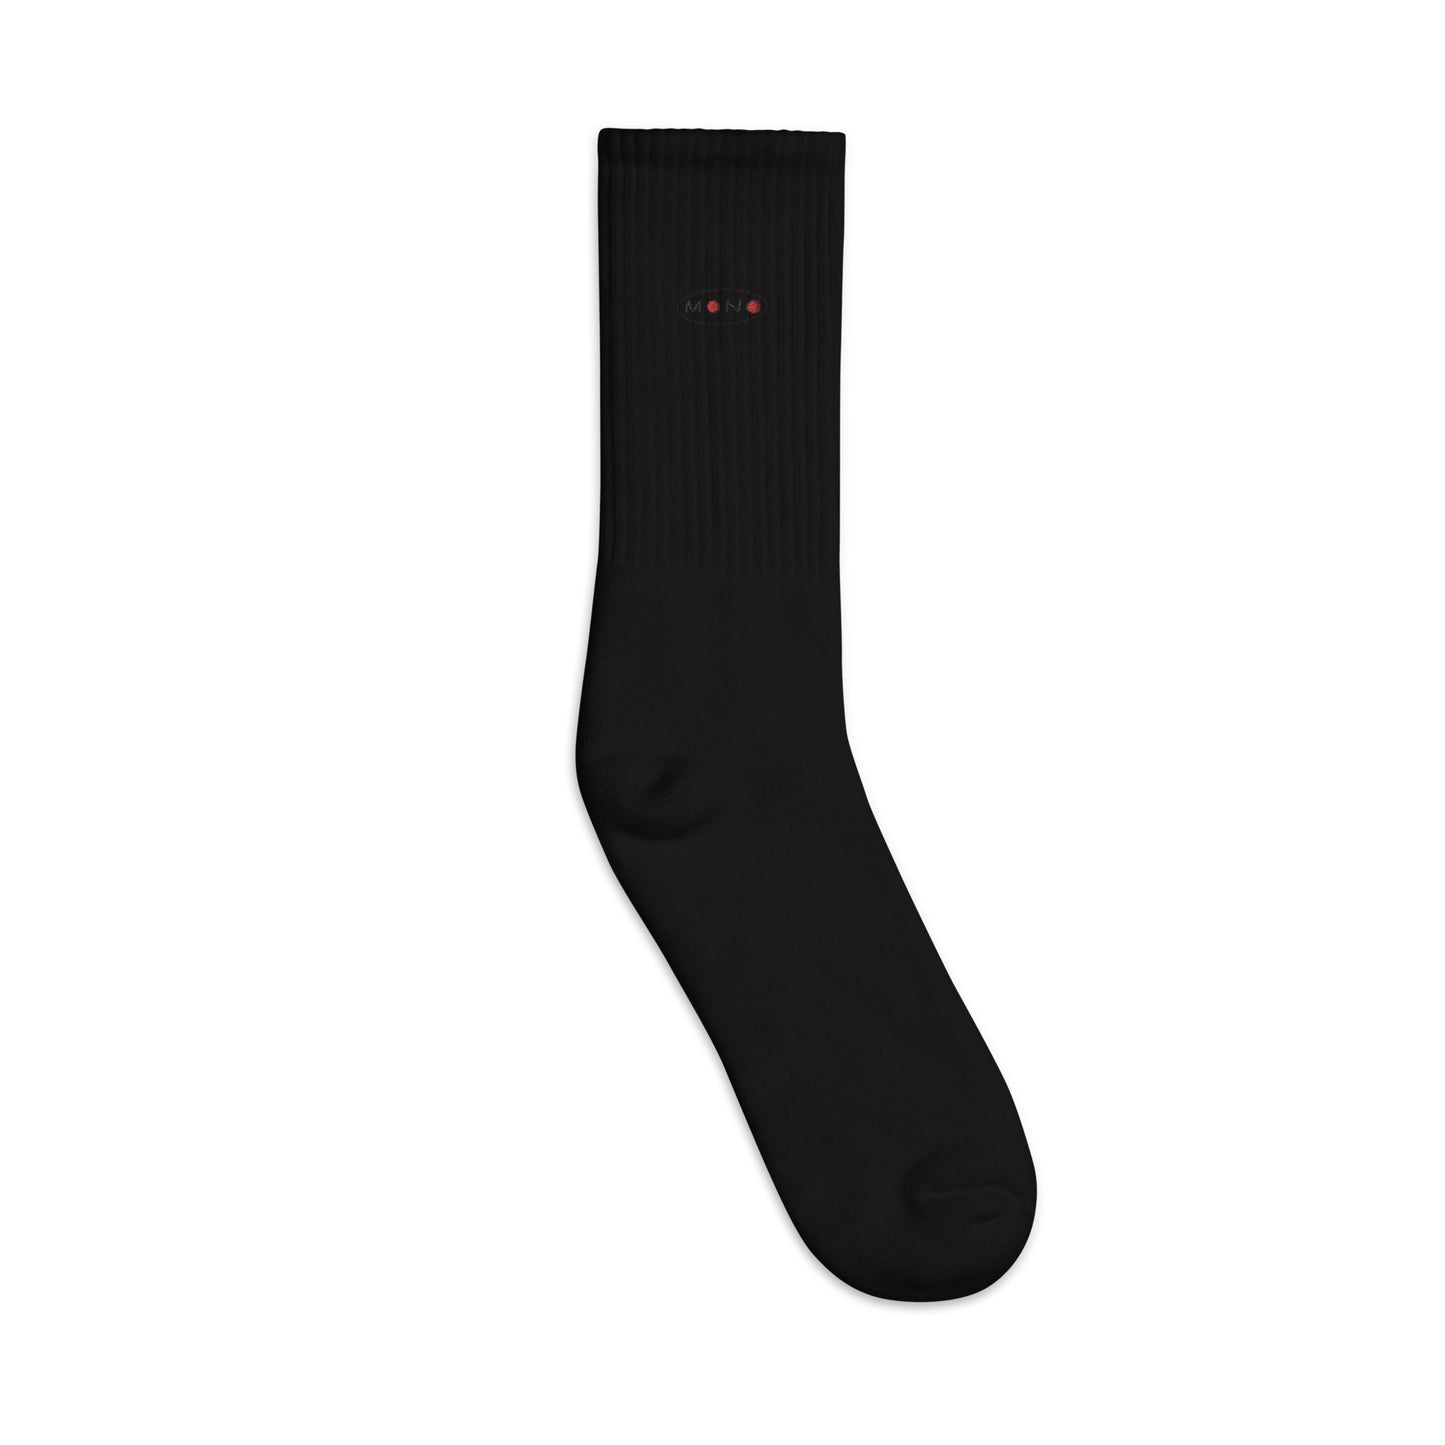 Mono Logo Embroidered Socks